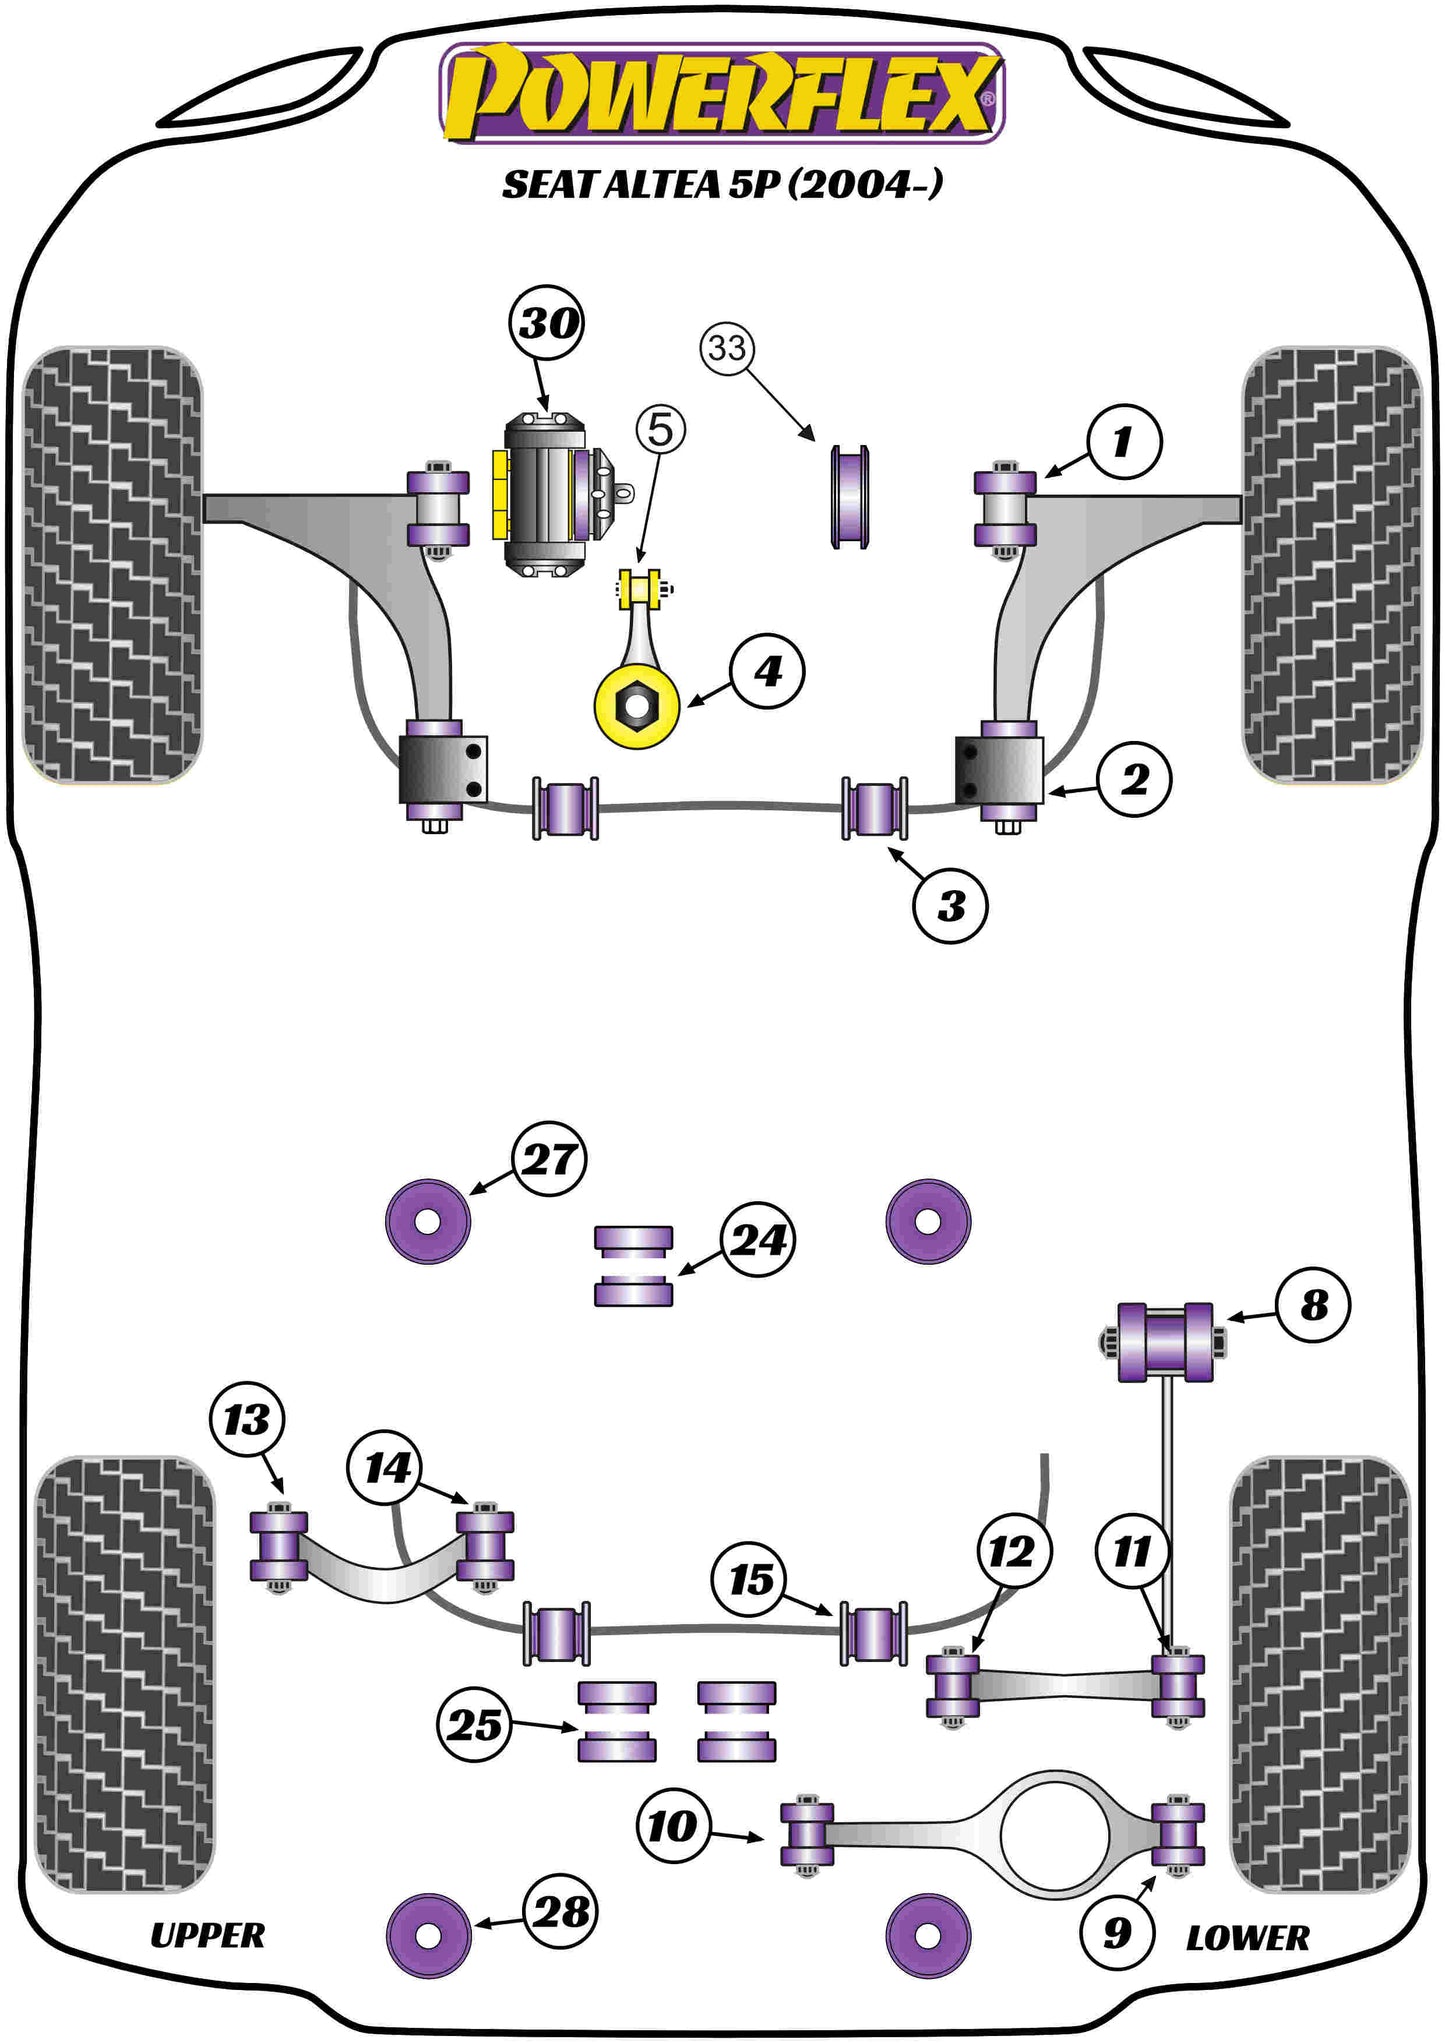 Powerflex Lower Engine Mount Insert (Large) Track for Seat Altea 5P (04-08)